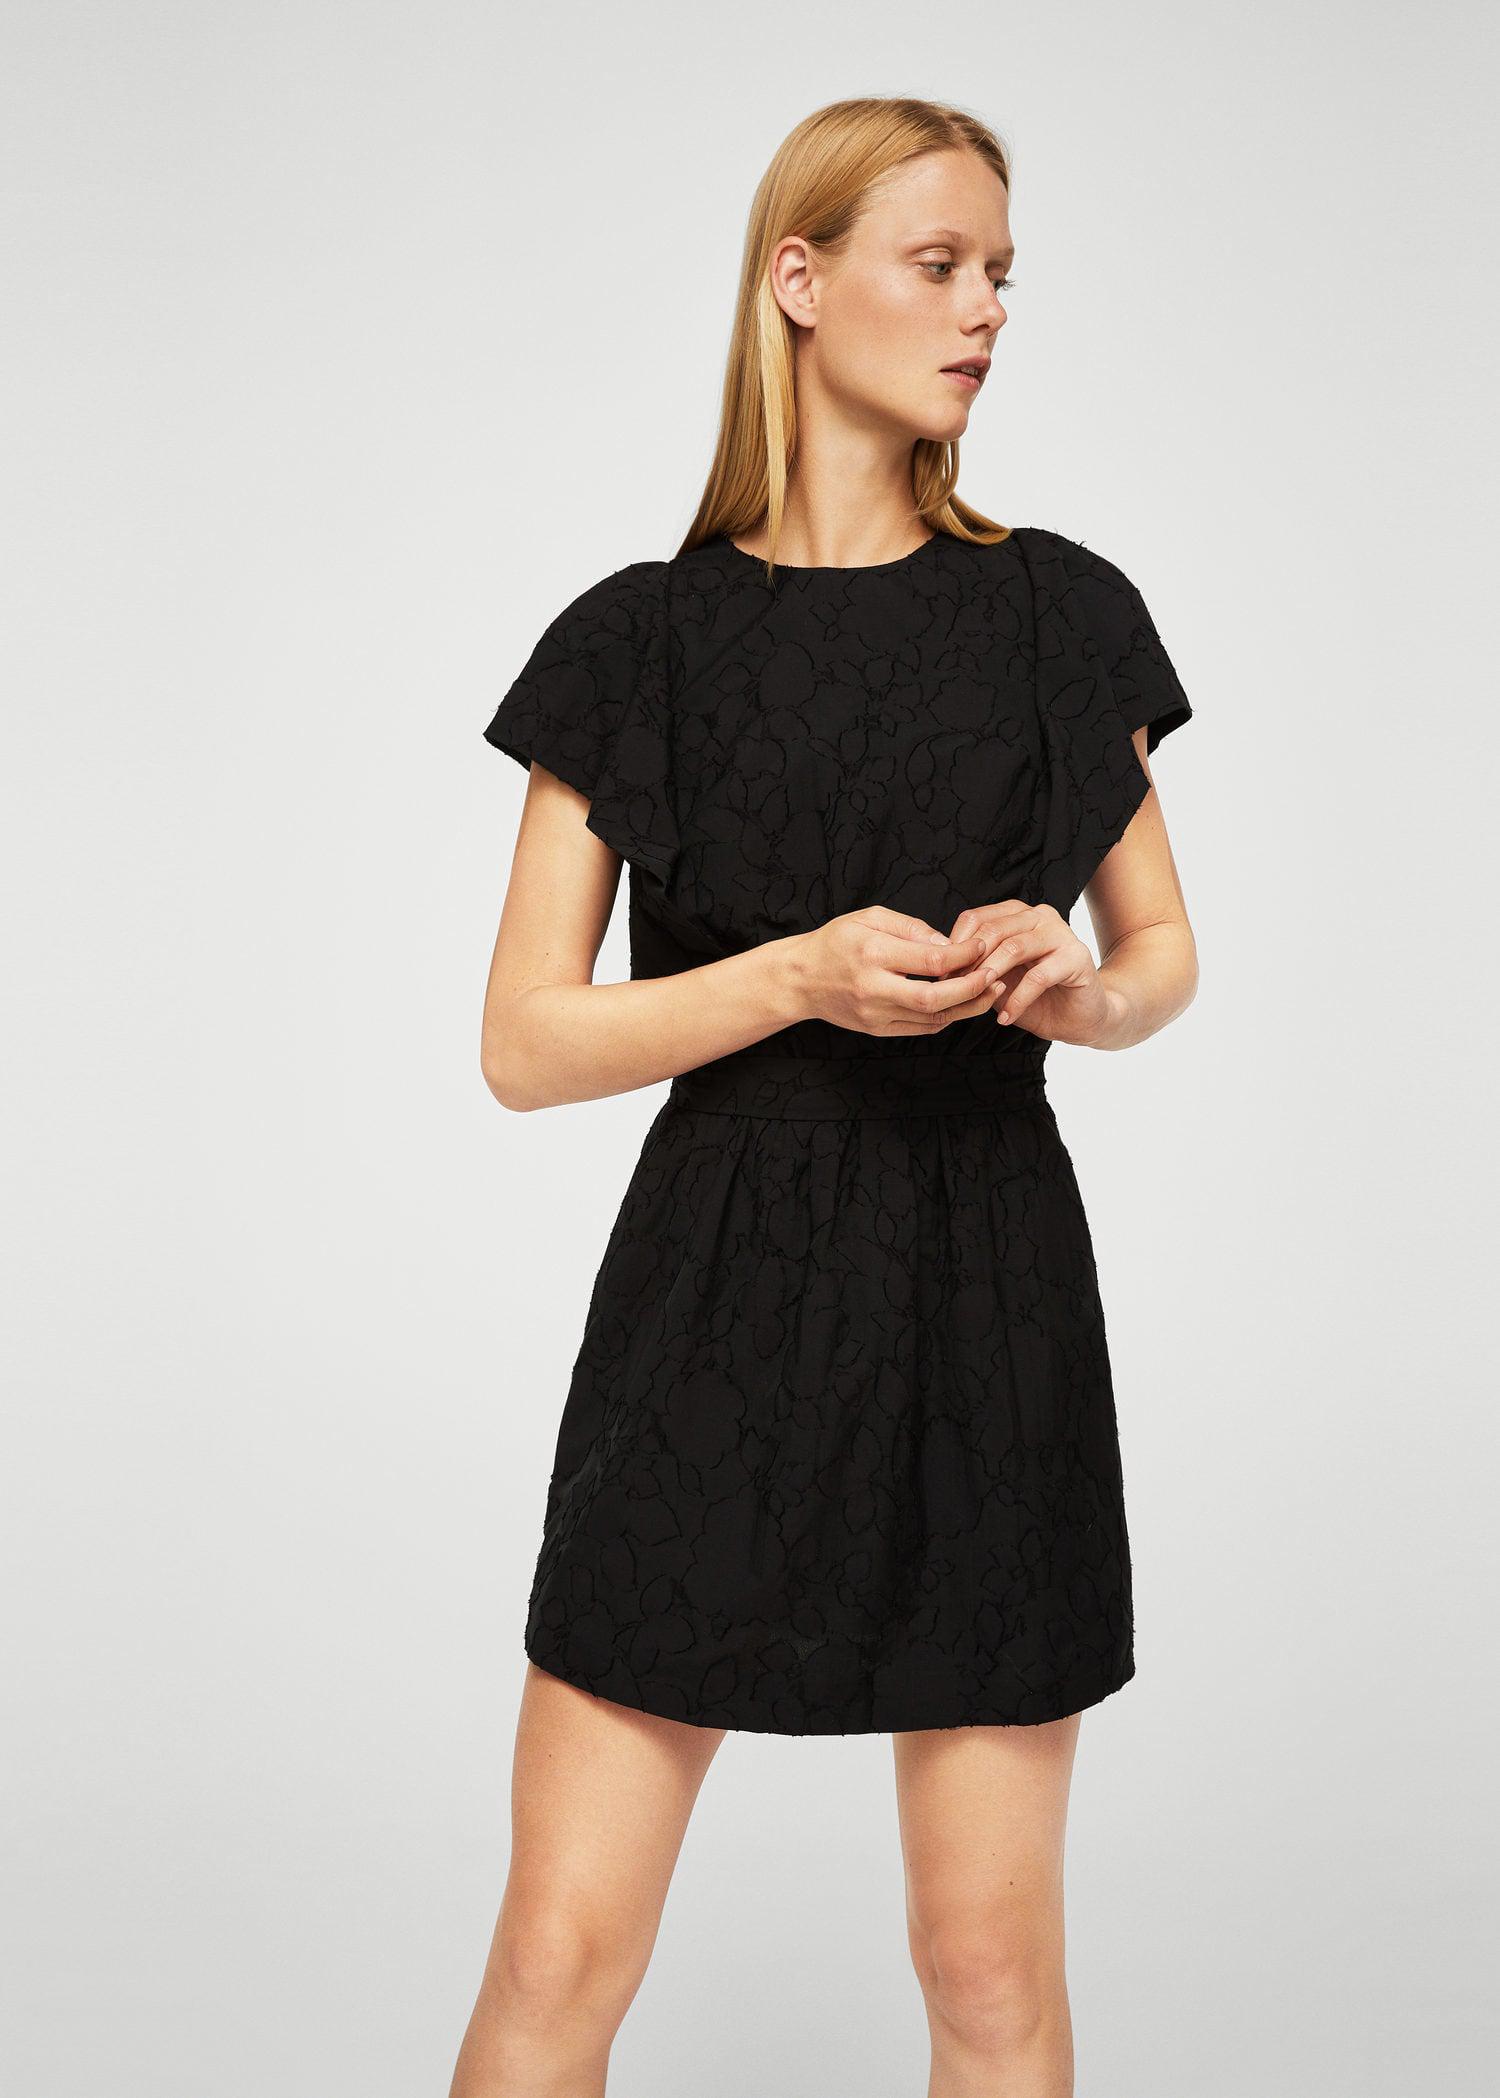 Lyst - Mango Ruffled Sleeve Dress in Black